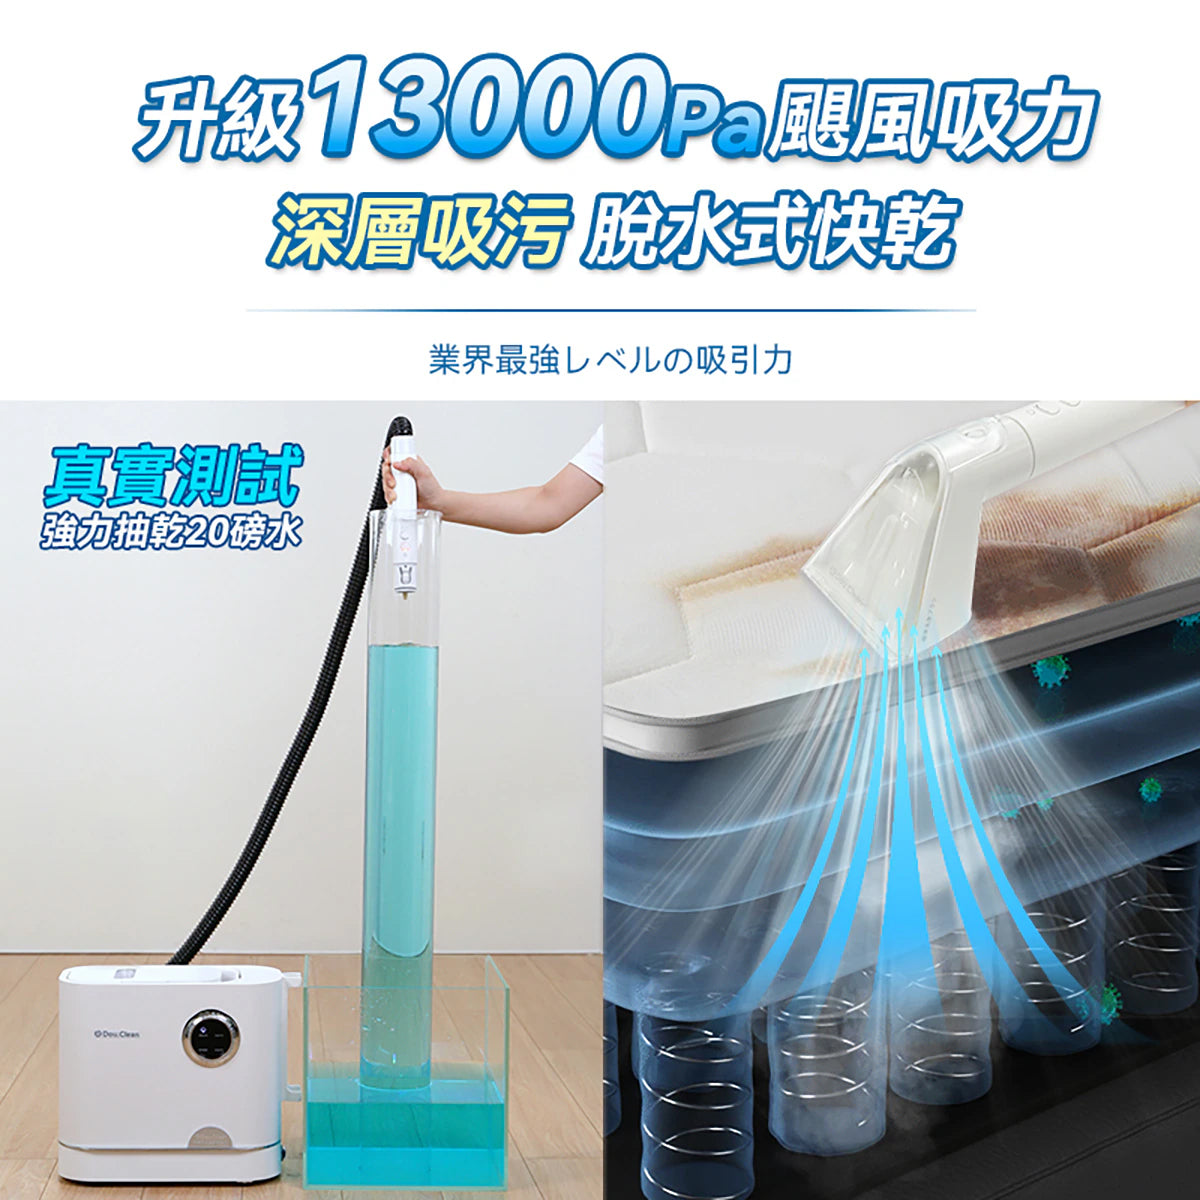 Double Clean YS1010 多用途乾濕水洗全屋離地清潔機 Pro+ (蒸氣殺菌版)